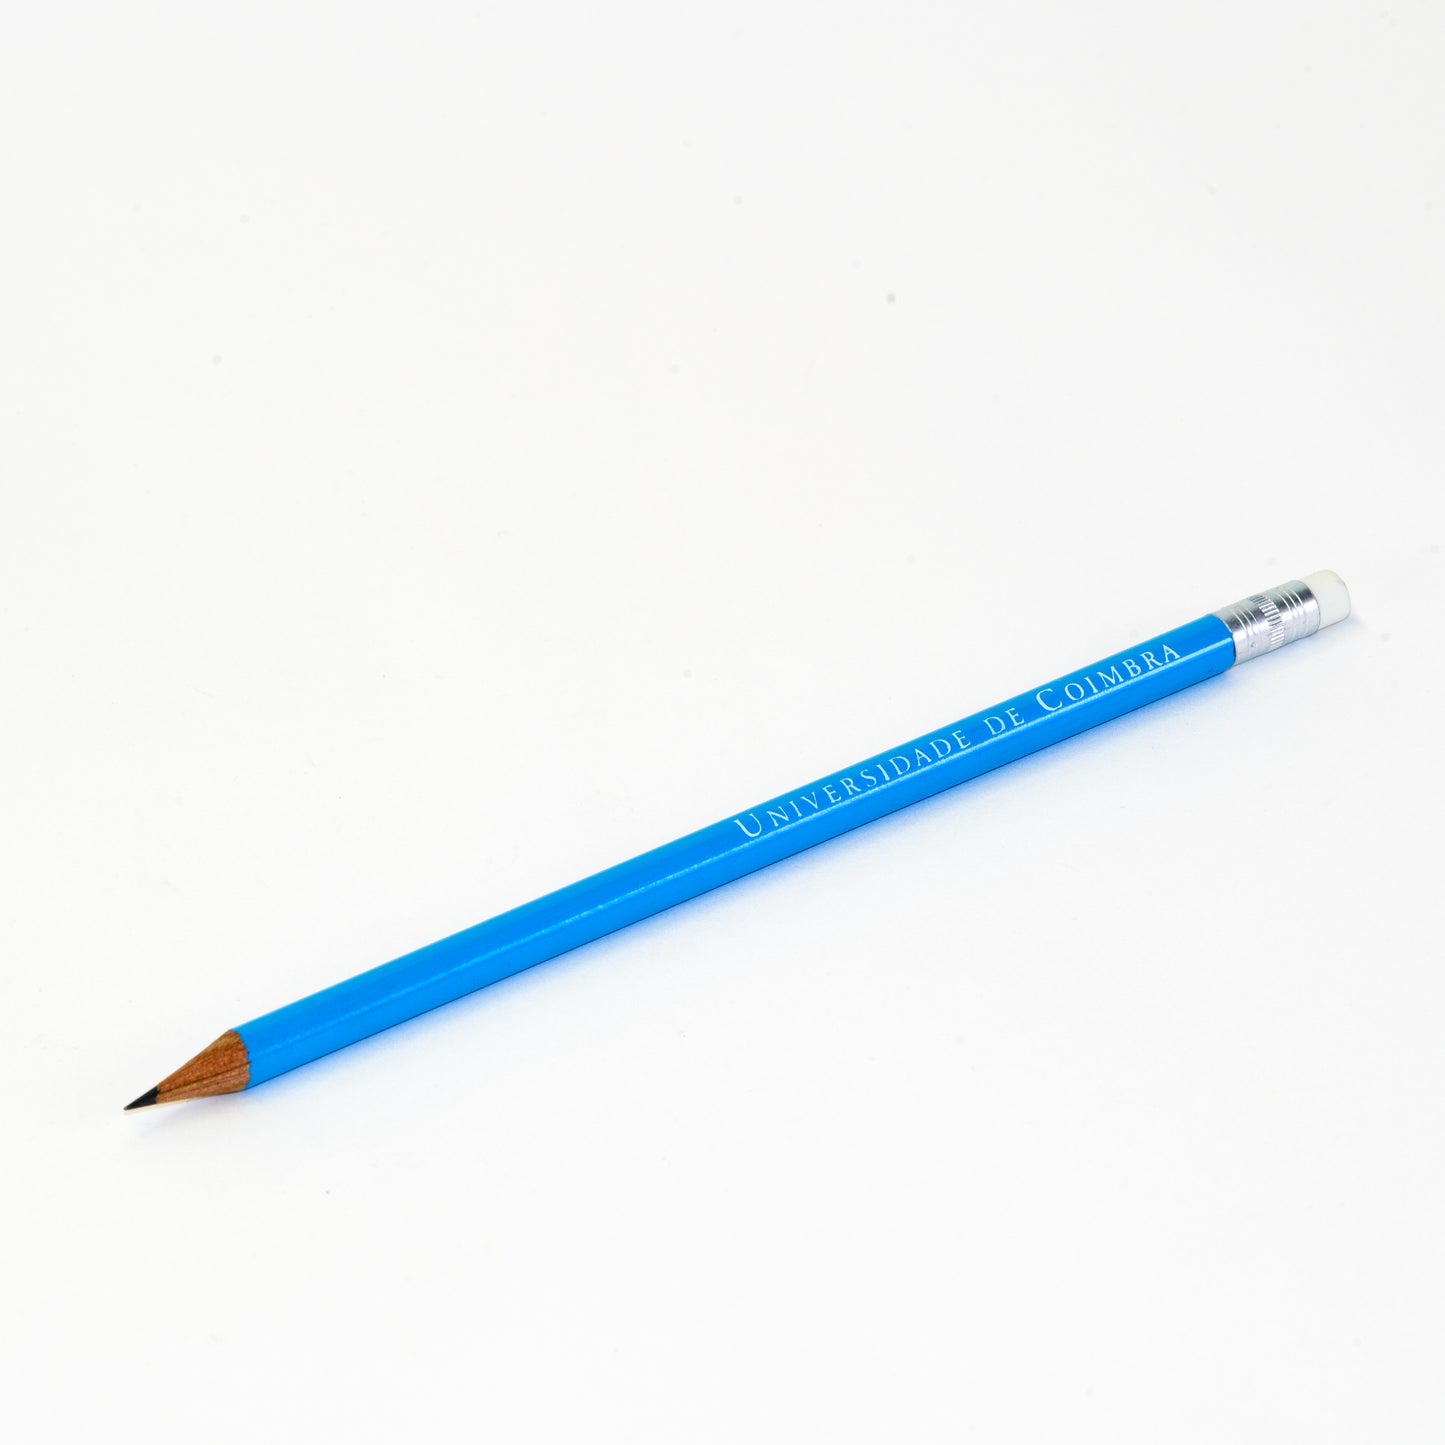 Lápis Azul Universidade de Coimbra com borracha